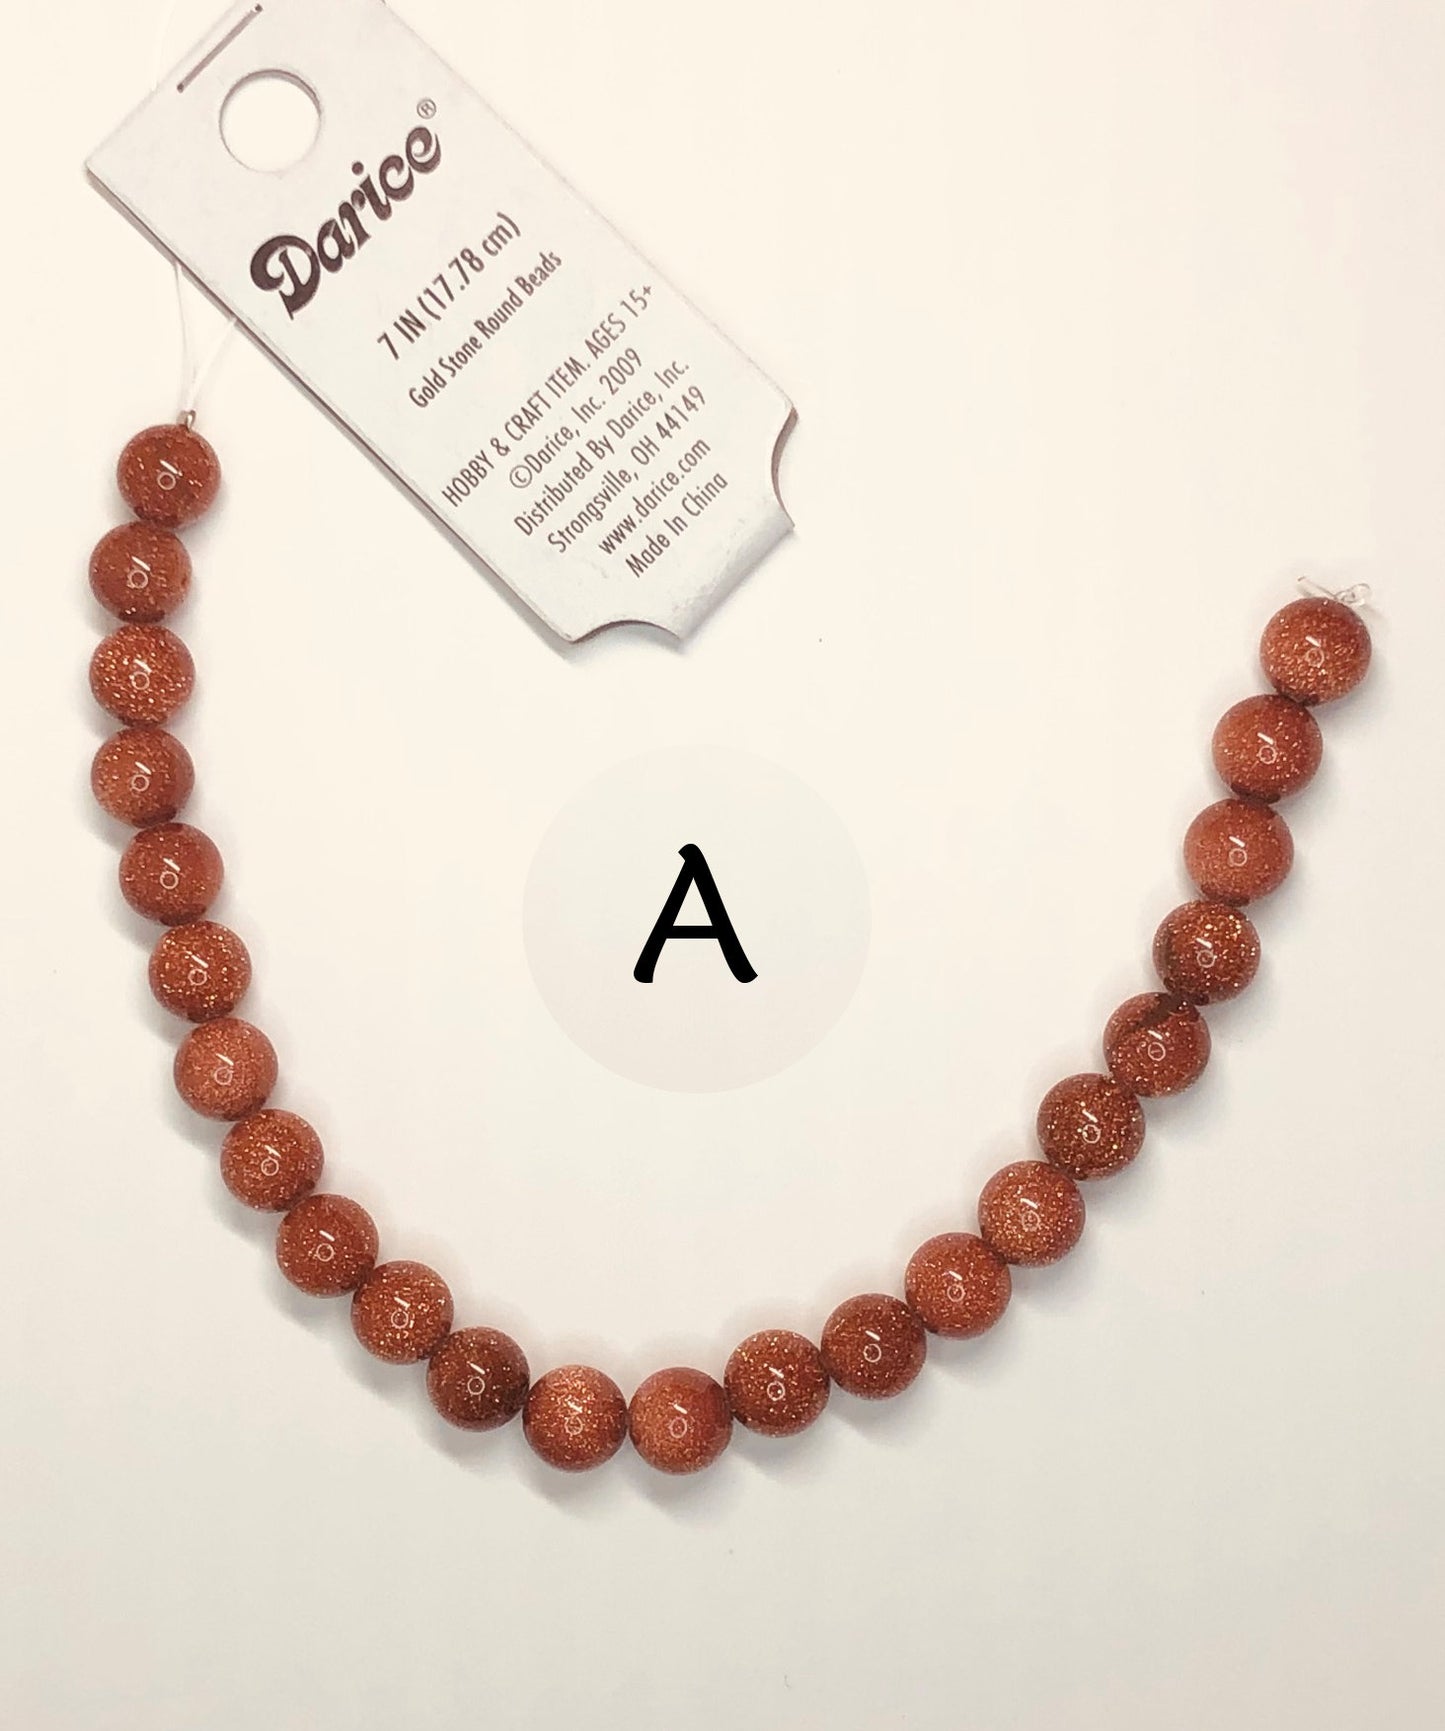 Darice Goldstone Semi-Precious Round Beads, 8 mm - 22 Beads - Strand A, B or C